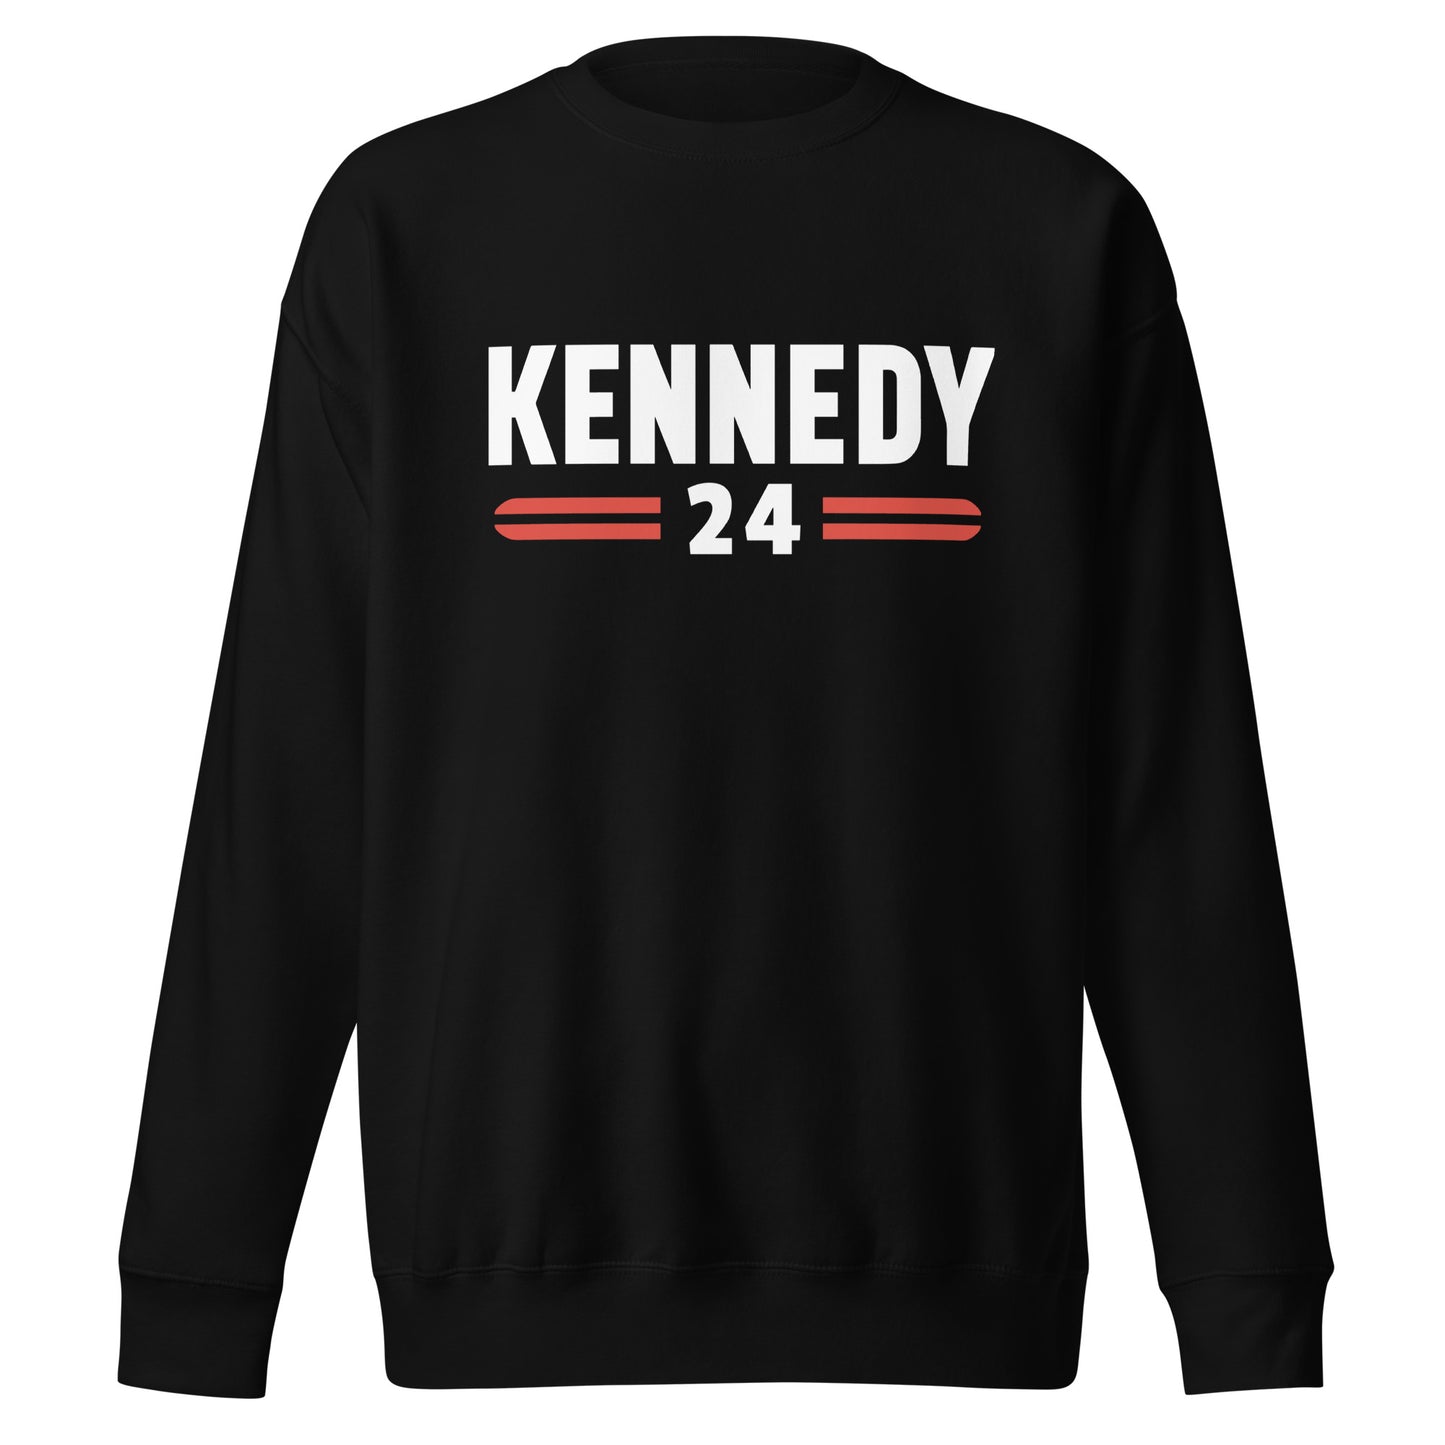 Kennedy Classic Premium Crewneck Sweatshirt